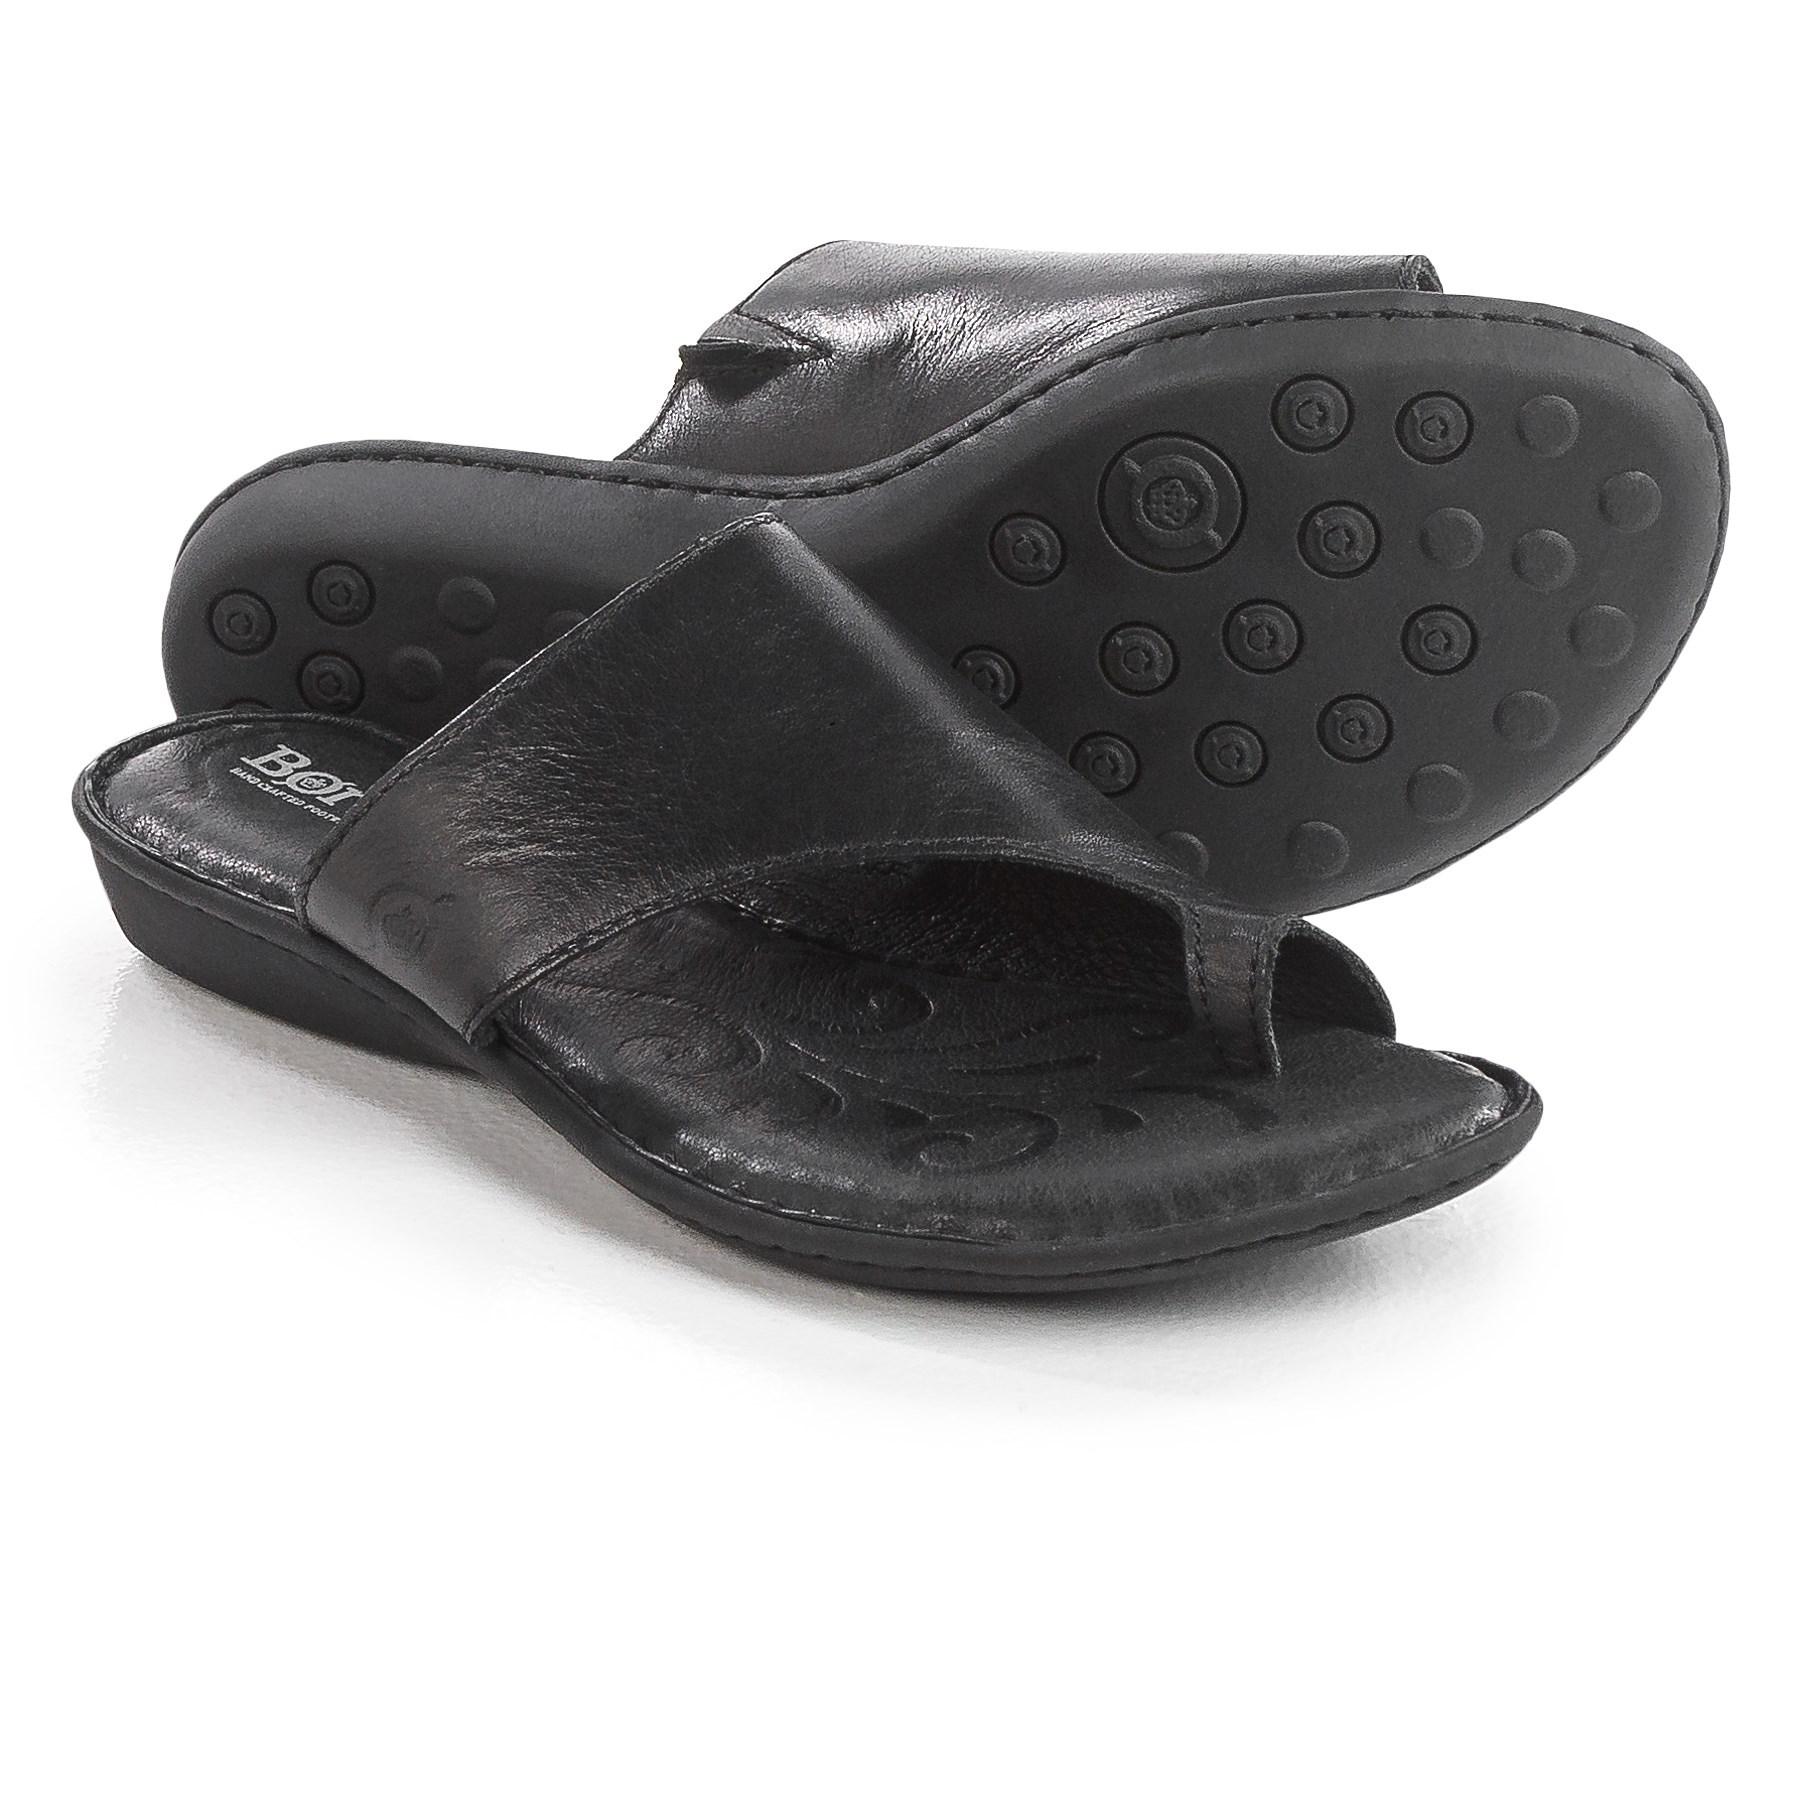 born black leather sandals